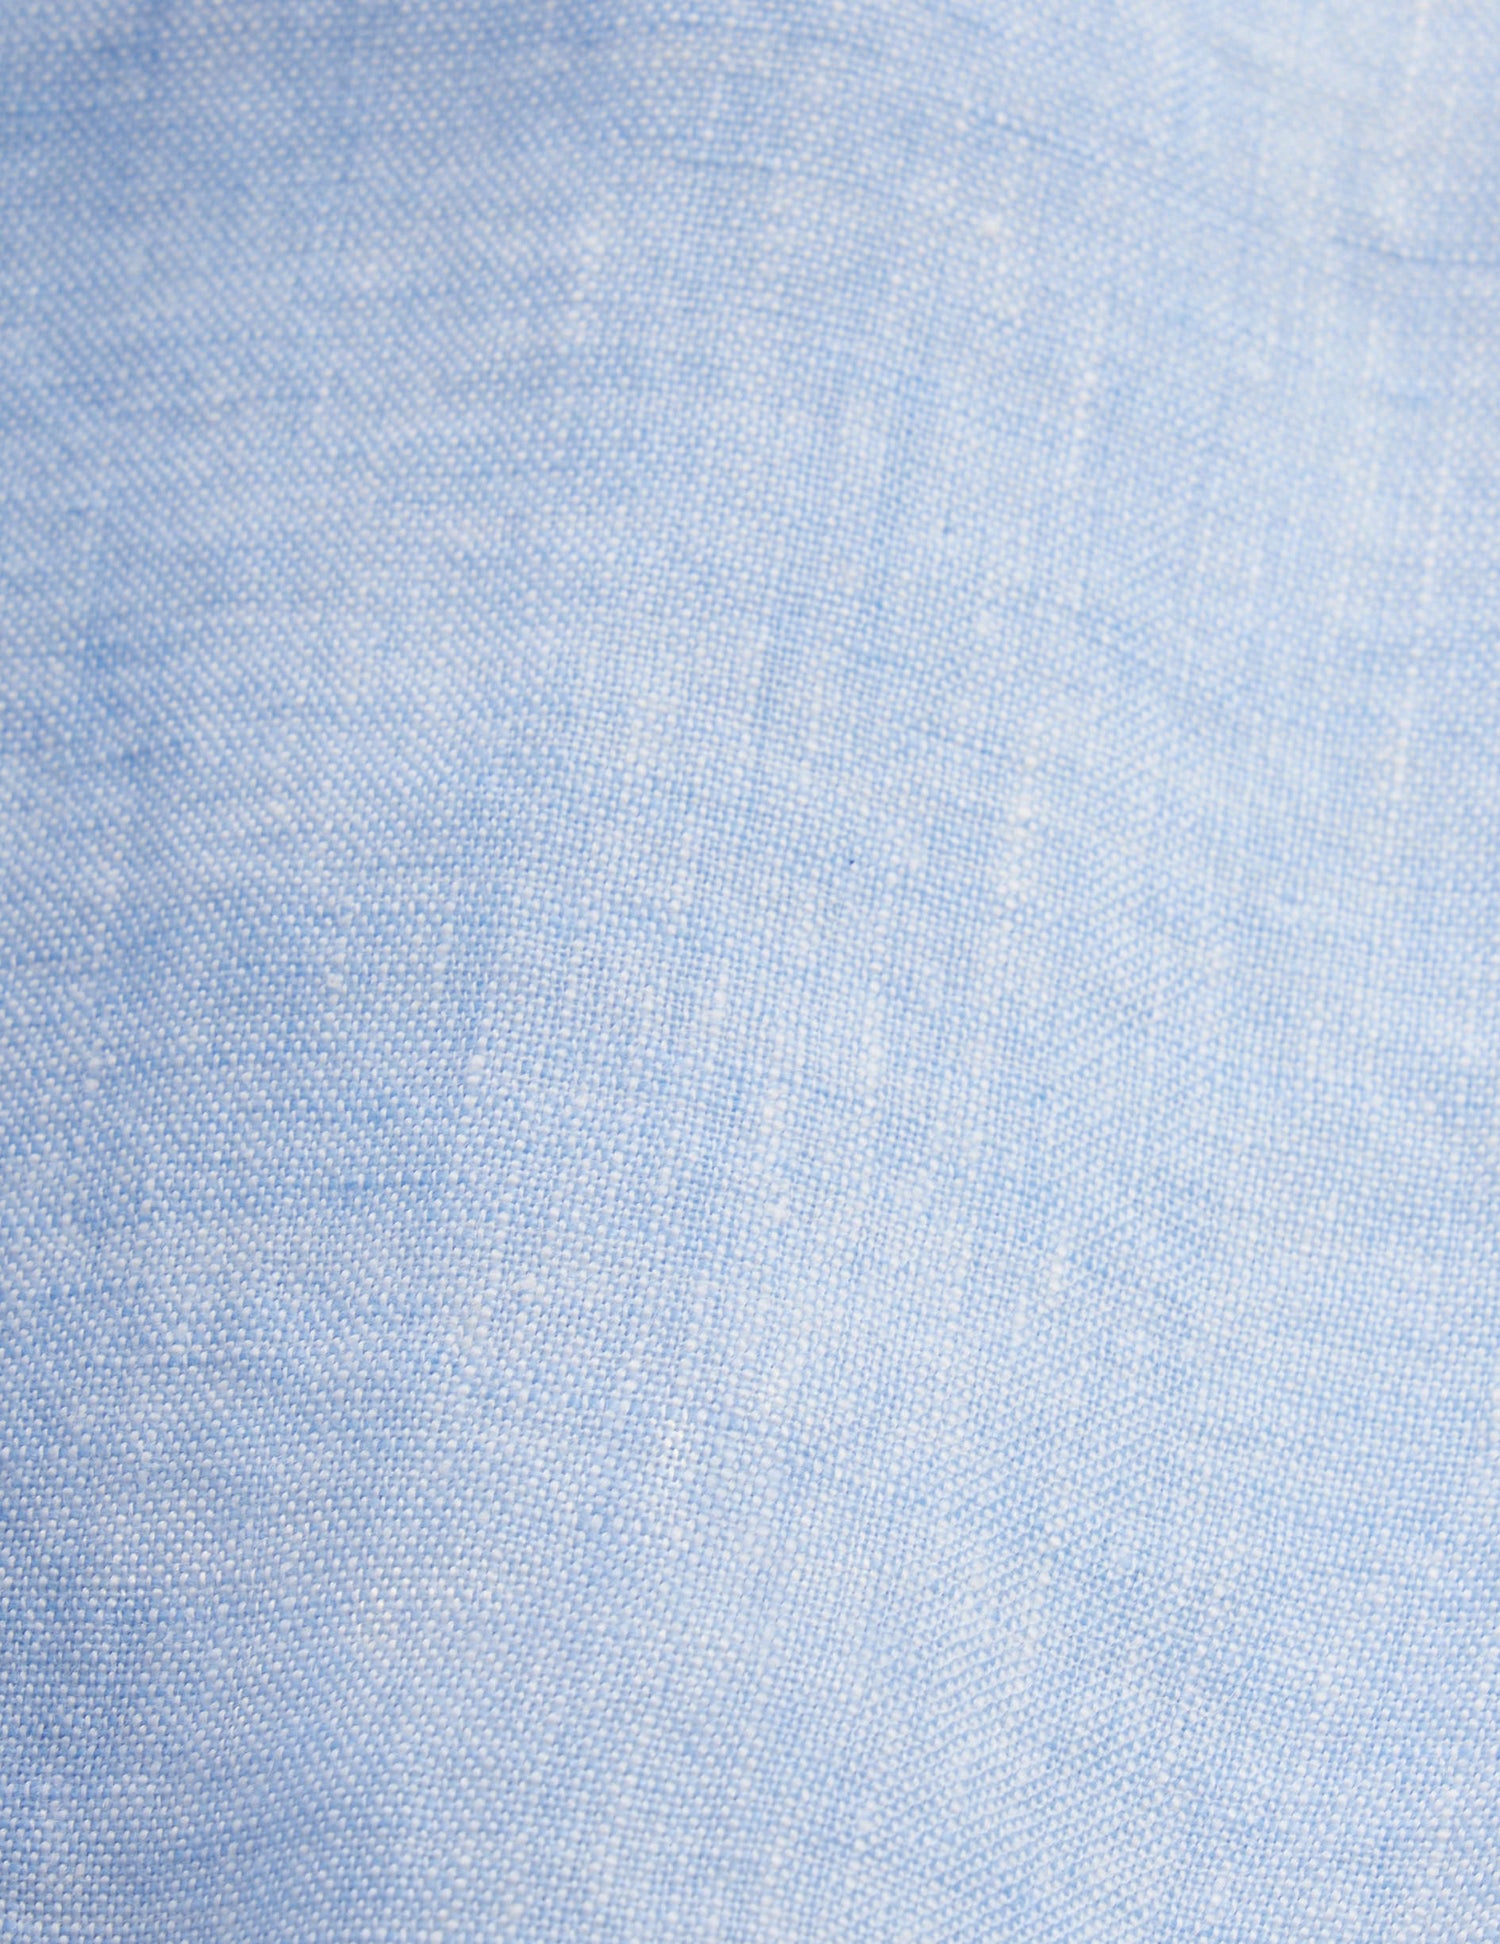 Aristote shirt in light blue linen - Linen - Italian Collar#4